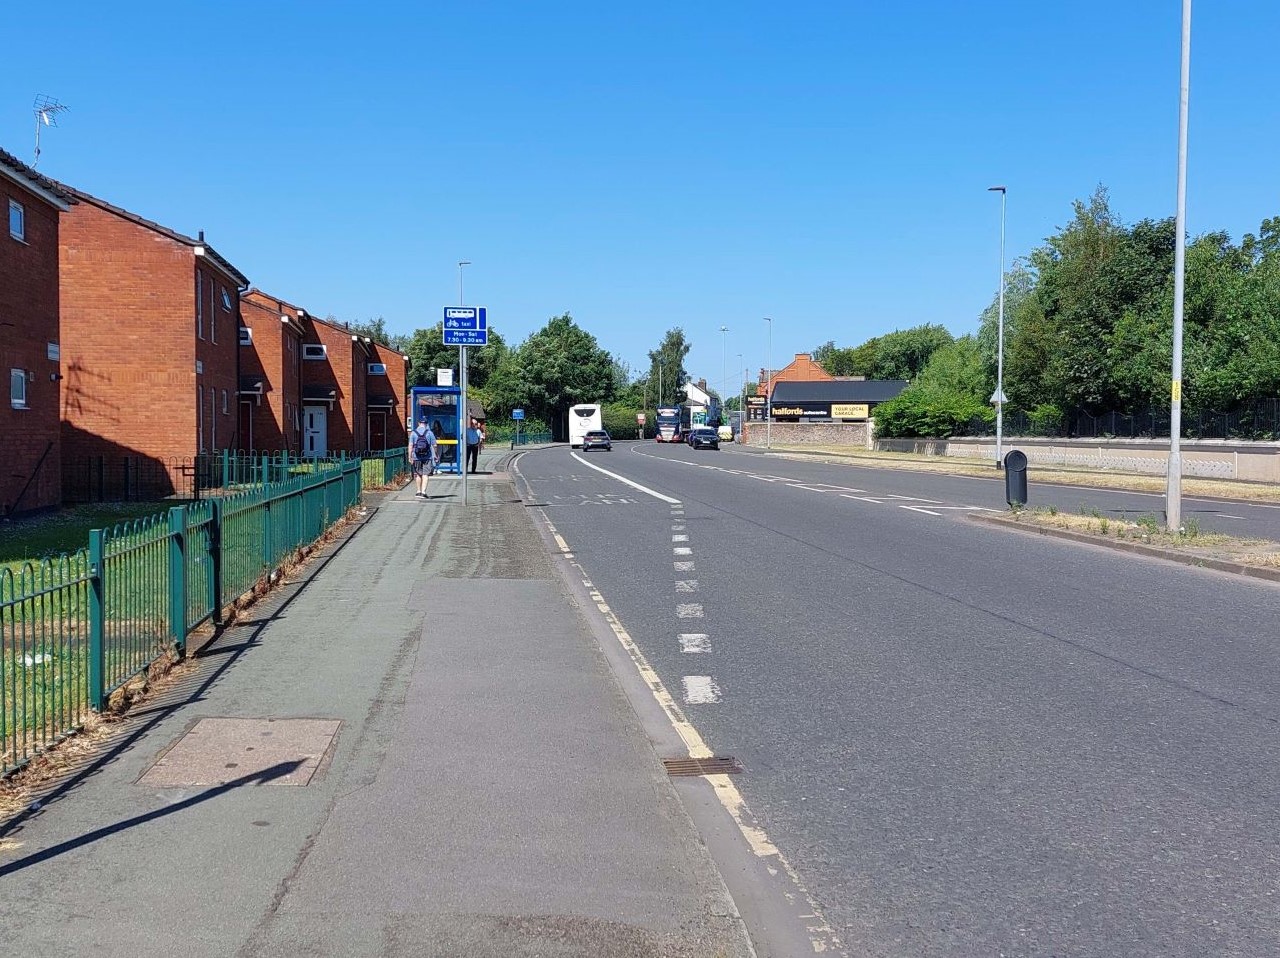 Knutsford road bus lane - approach to Bridge Foot 1